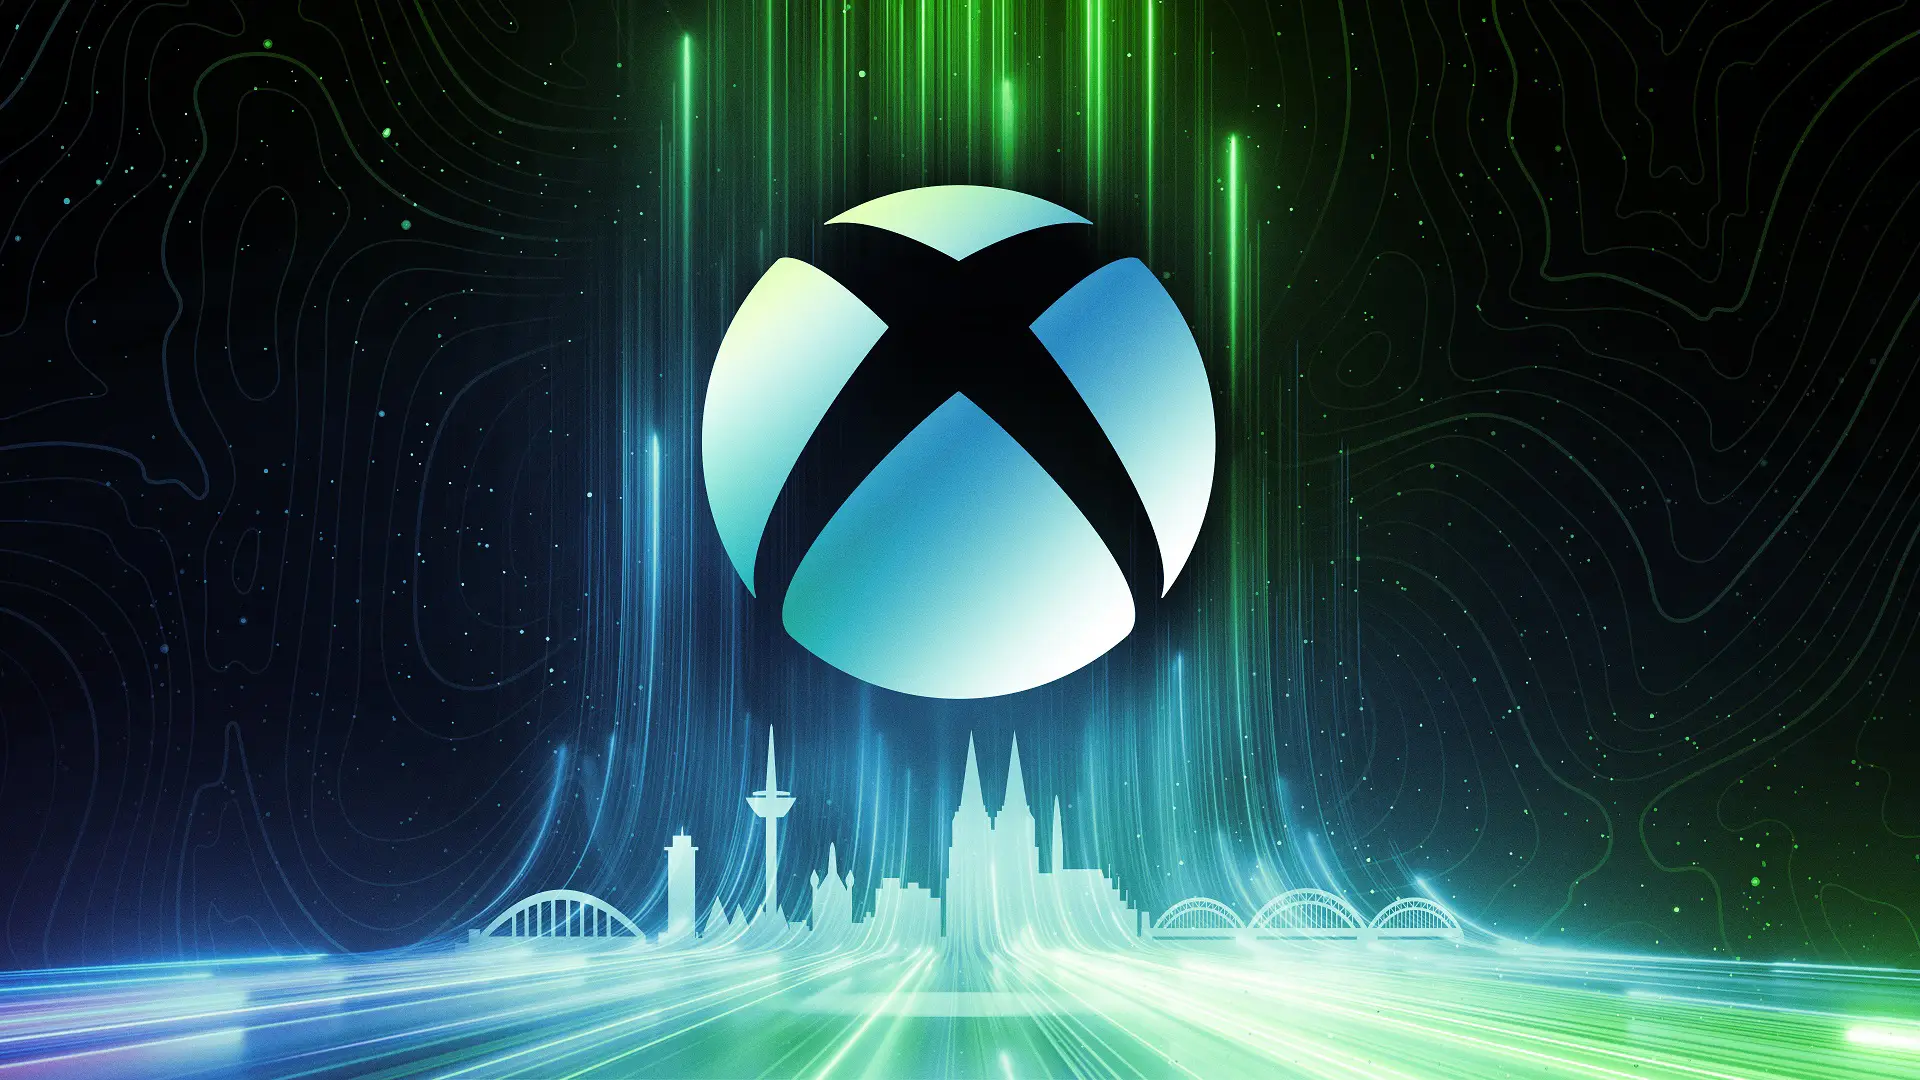 Xbox Achieves Record Q1 Gaming Revenue, but Hardware Sales Decline